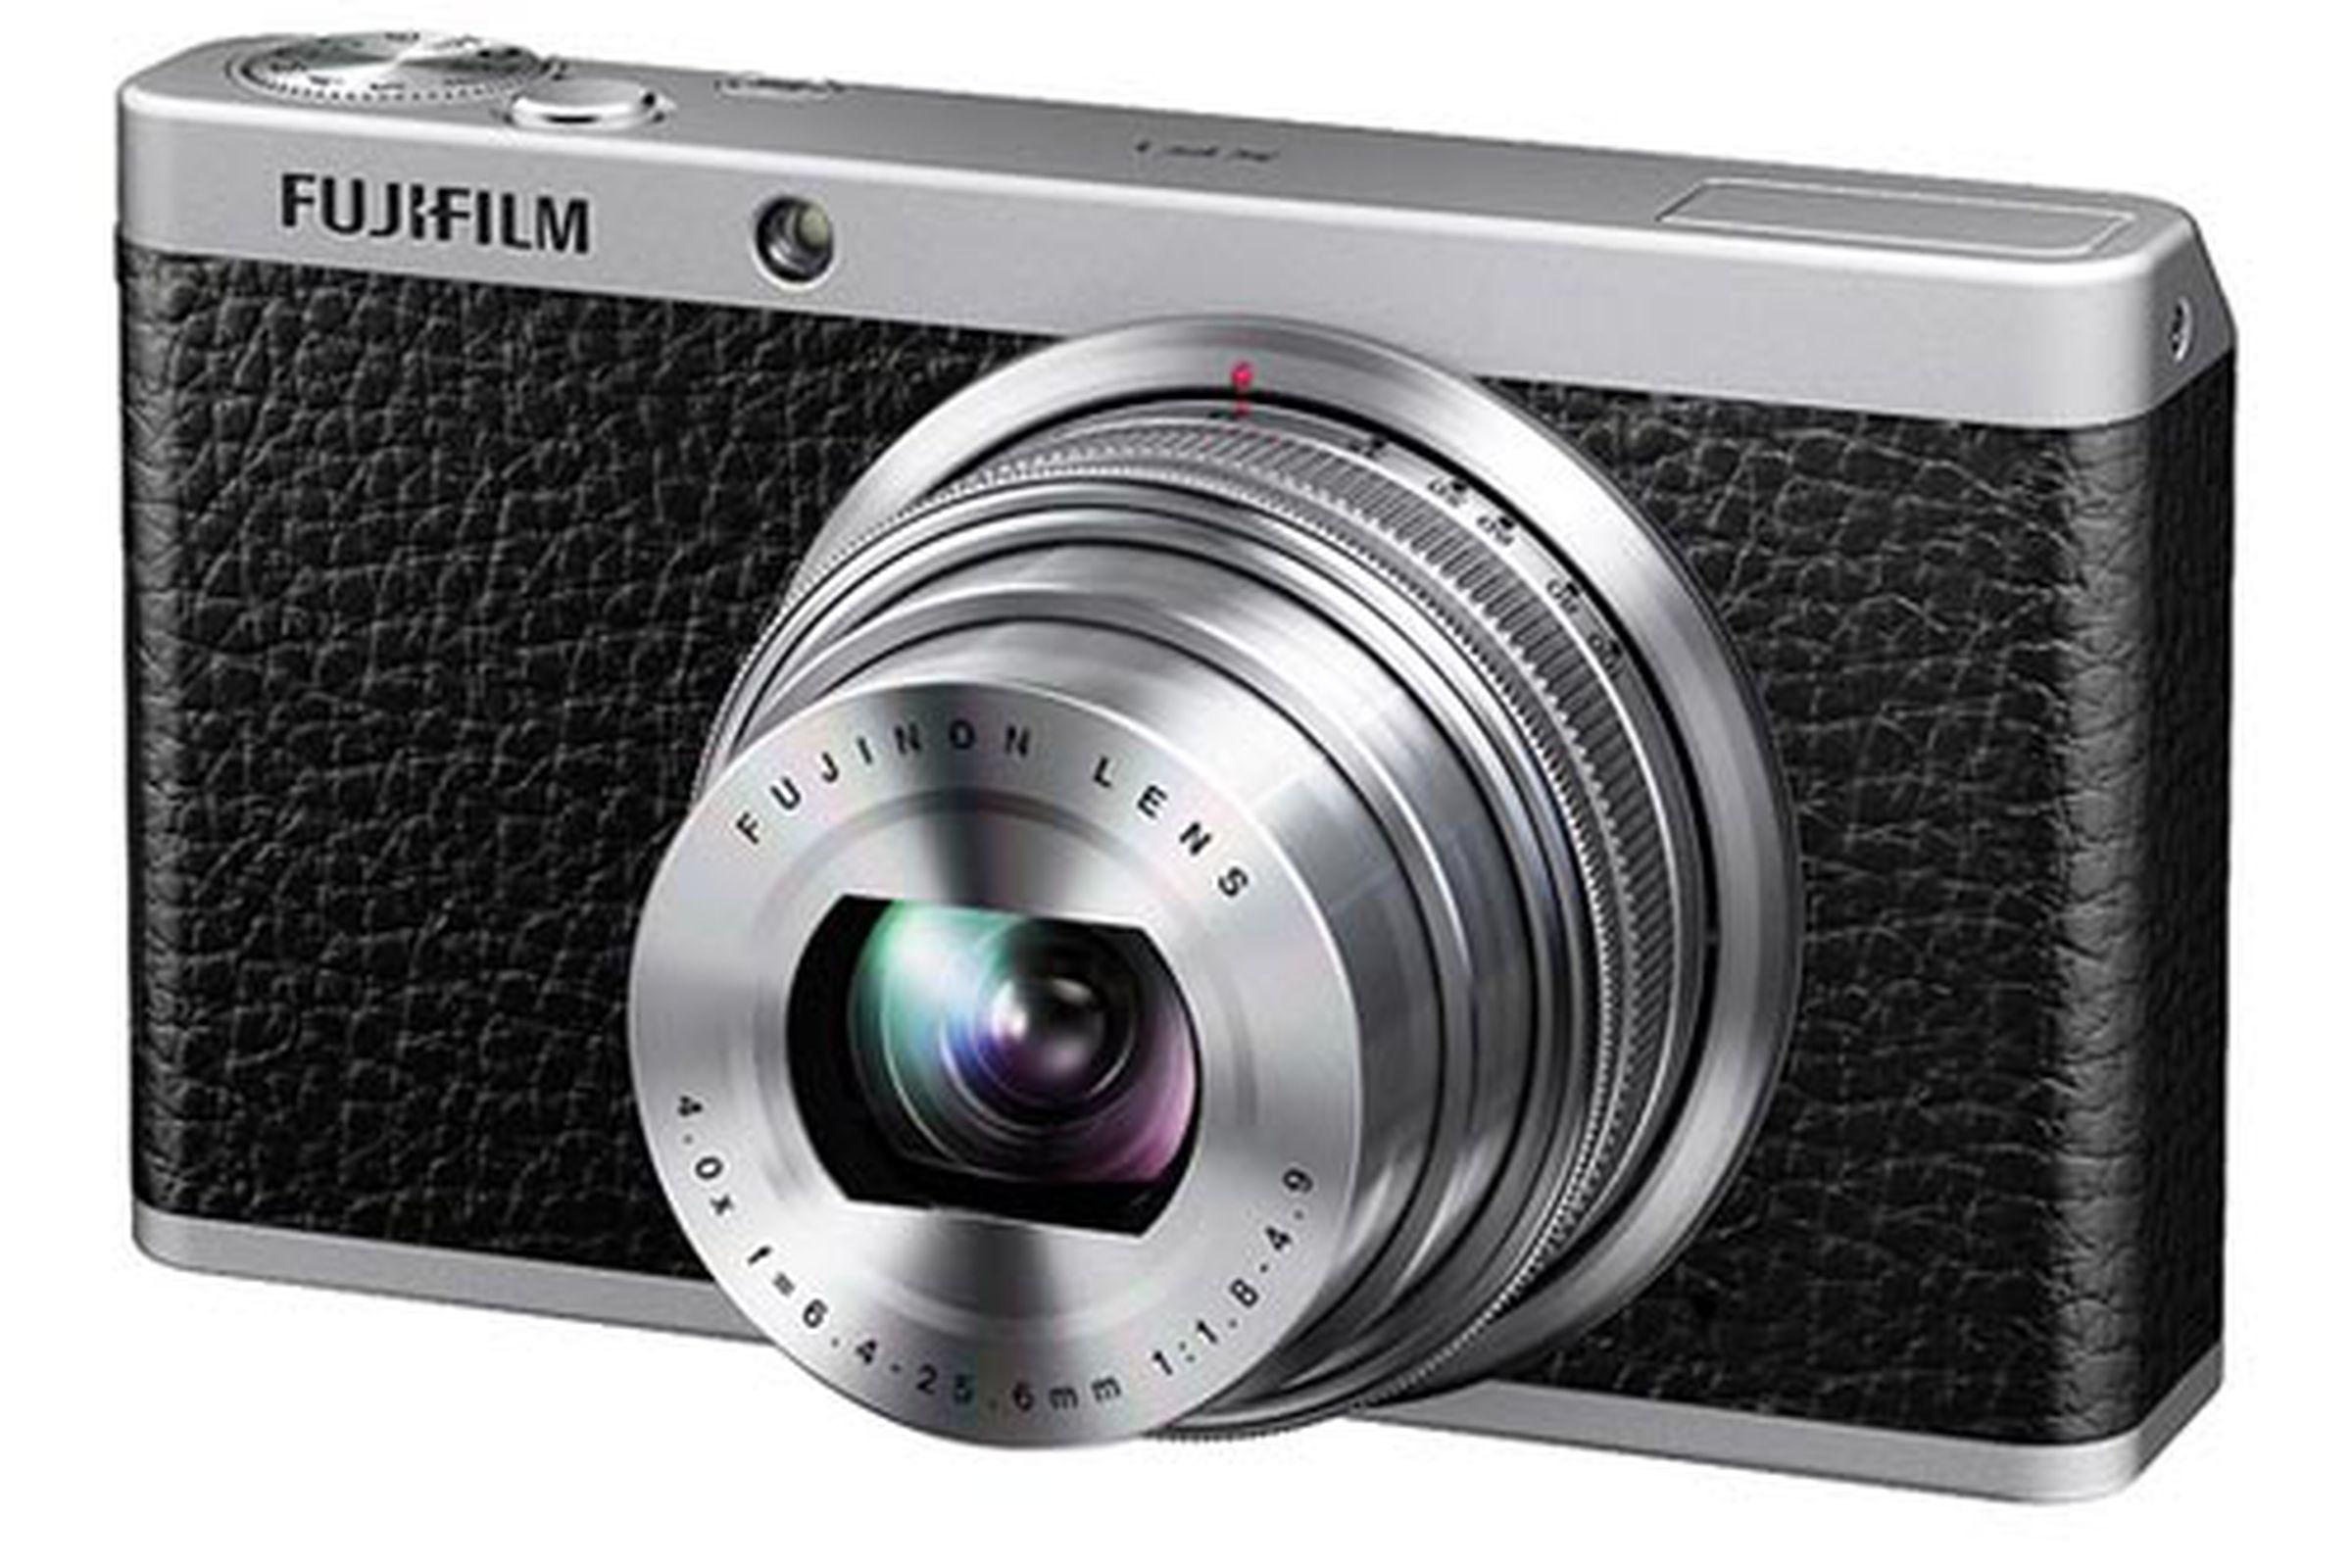 Fujifilm X compact camera